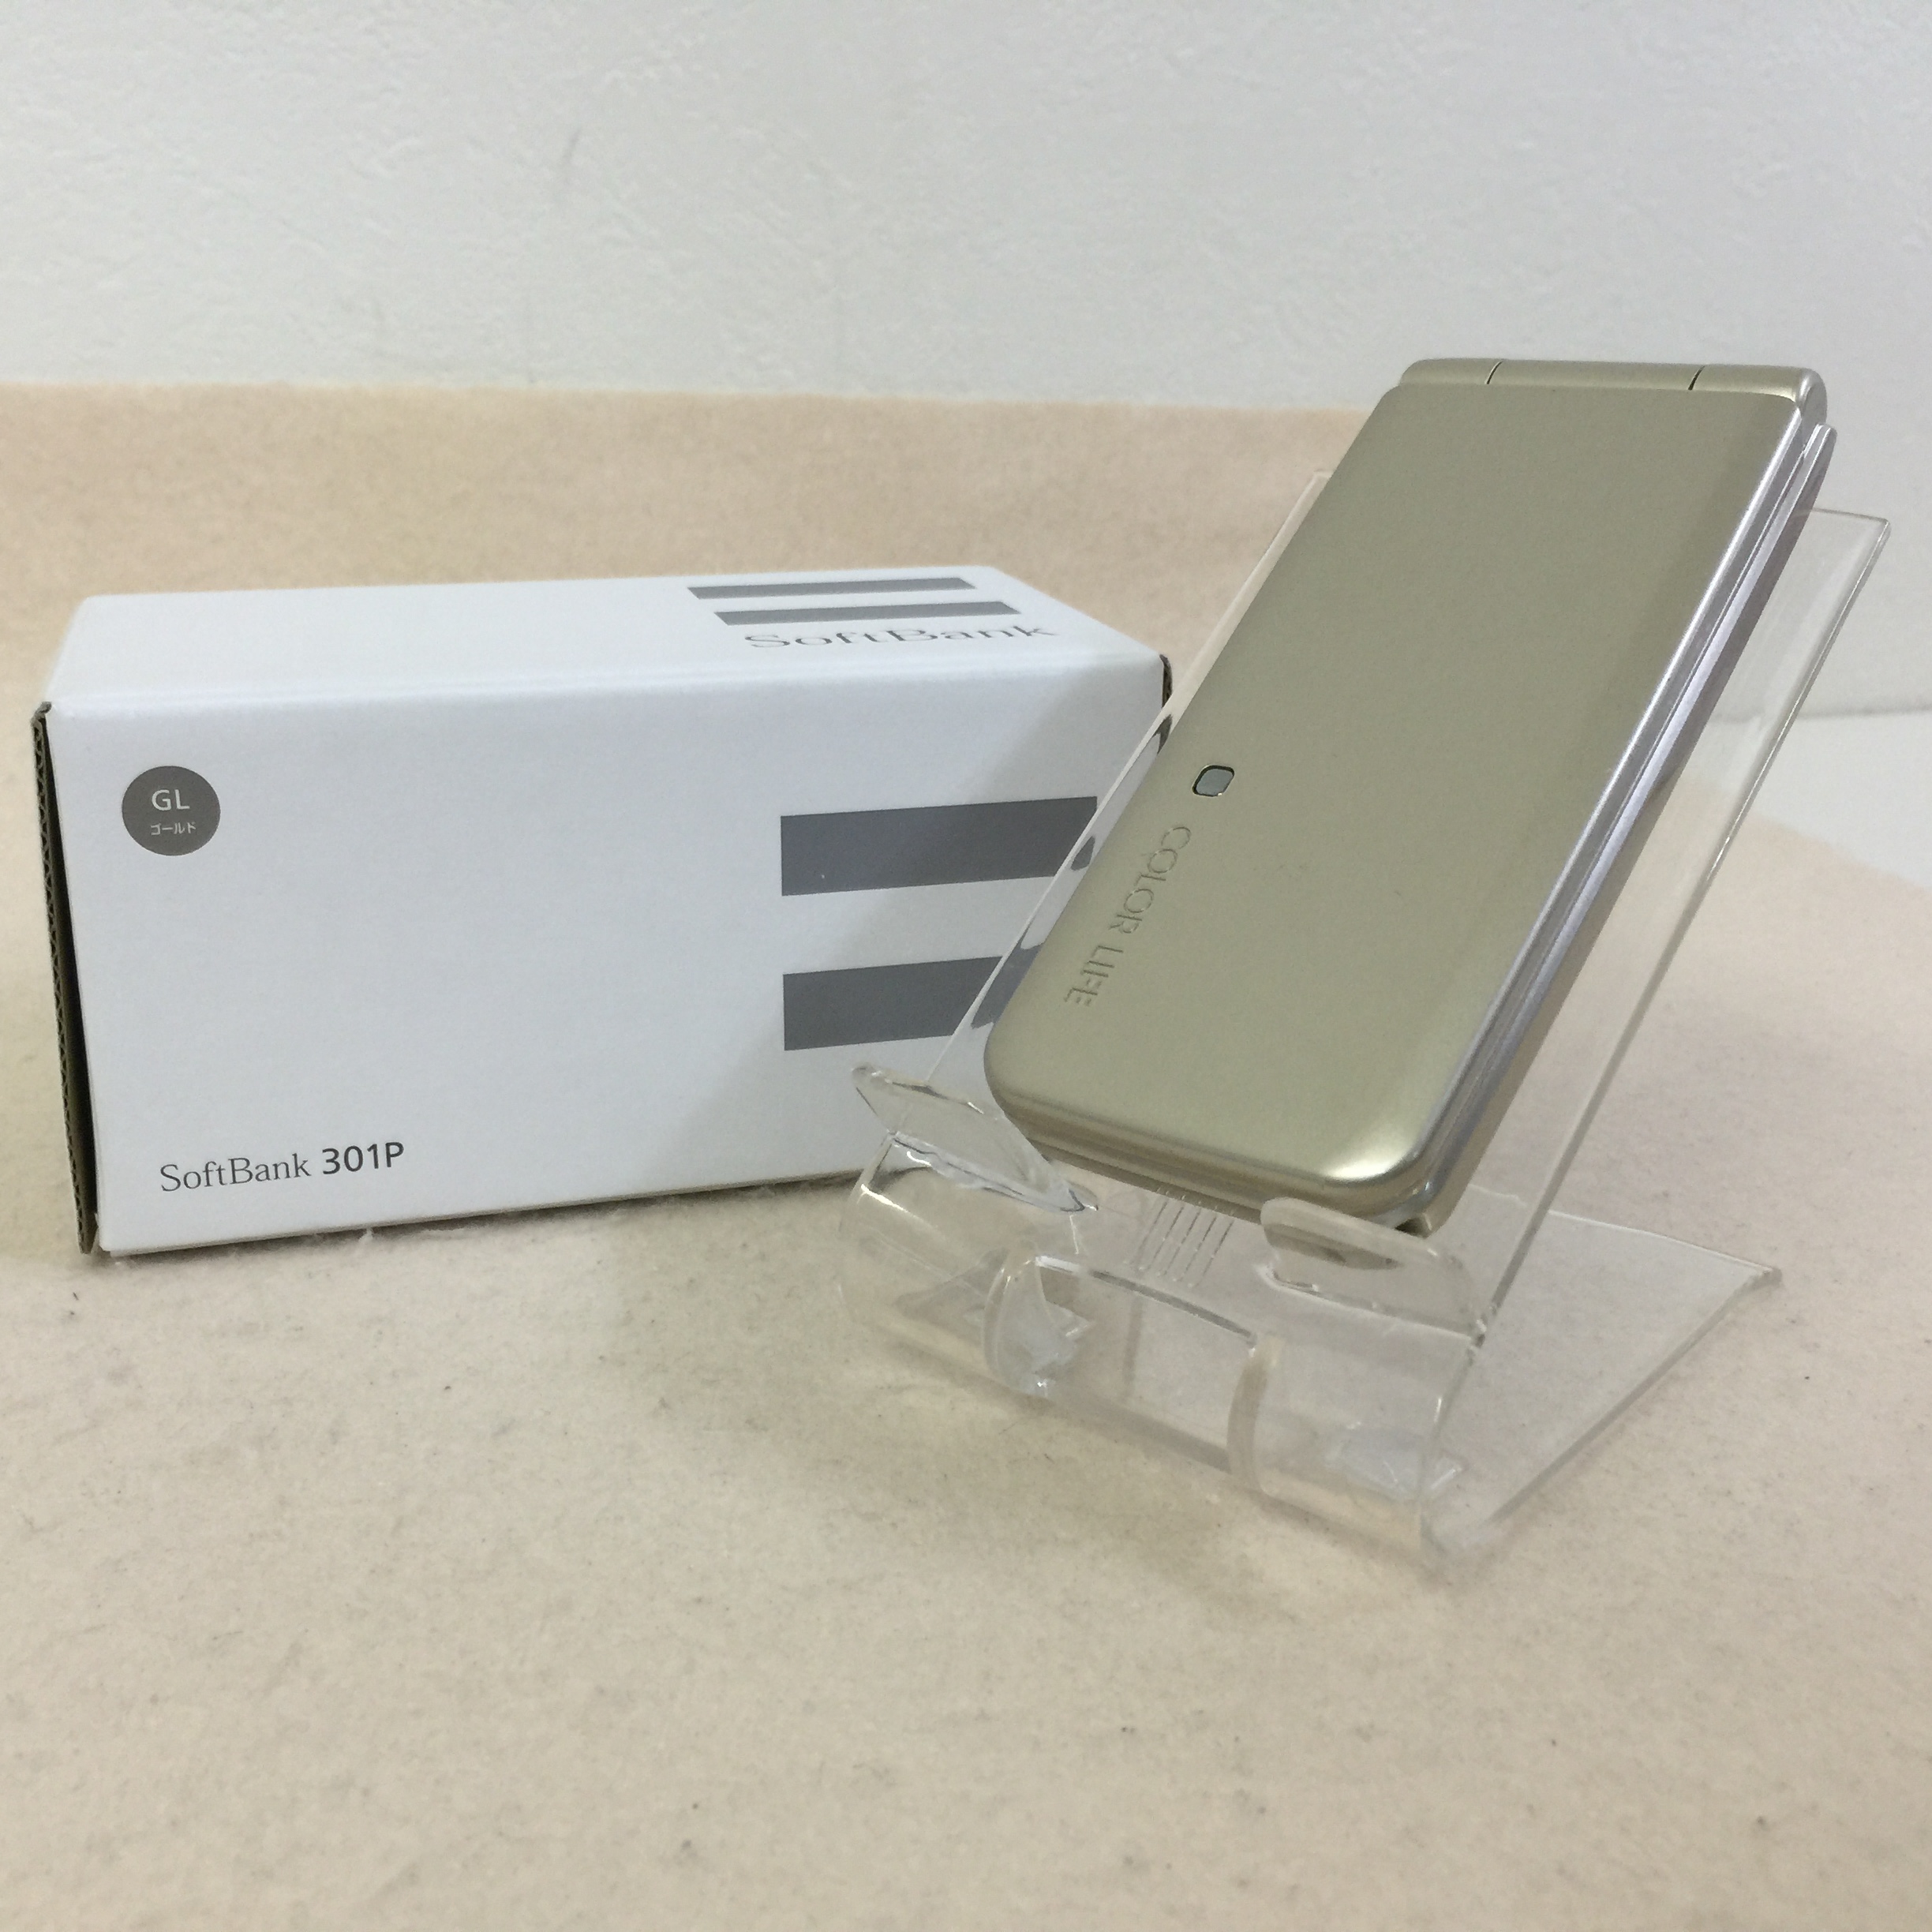 COLOR LIFE4 WATERPROOF SoftBank 301P  スマホ・携帯・iPhone高価買取のモバックス！大阪含め全国10箇所に店舗あり！